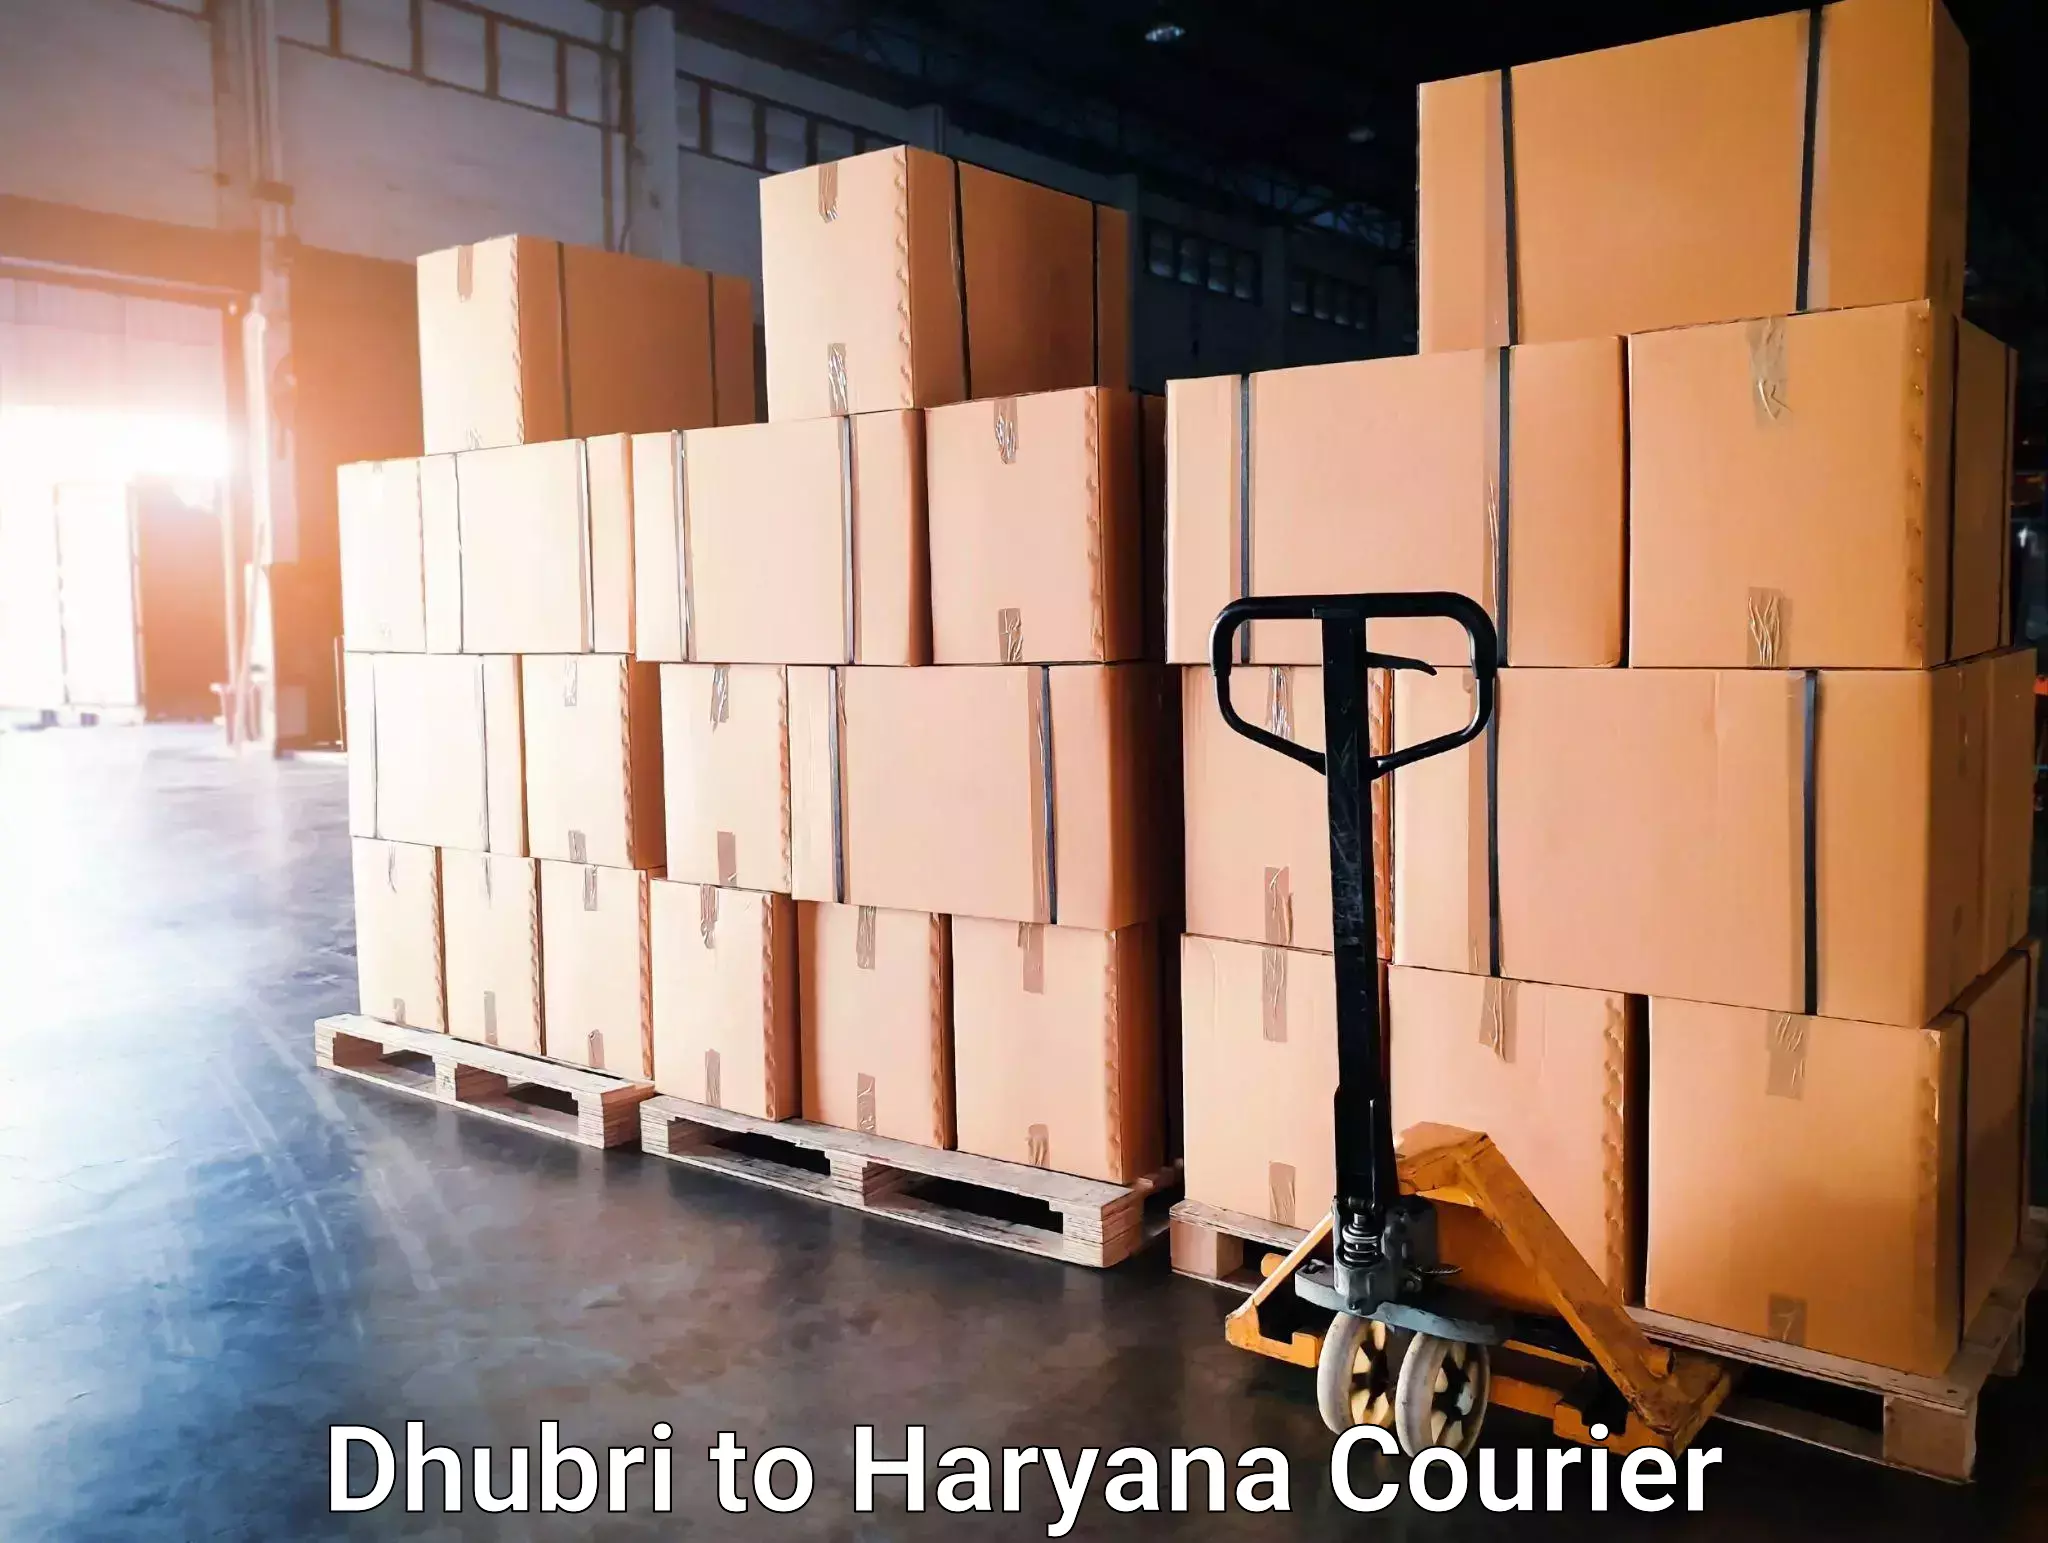 Global logistics network Dhubri to Haryana